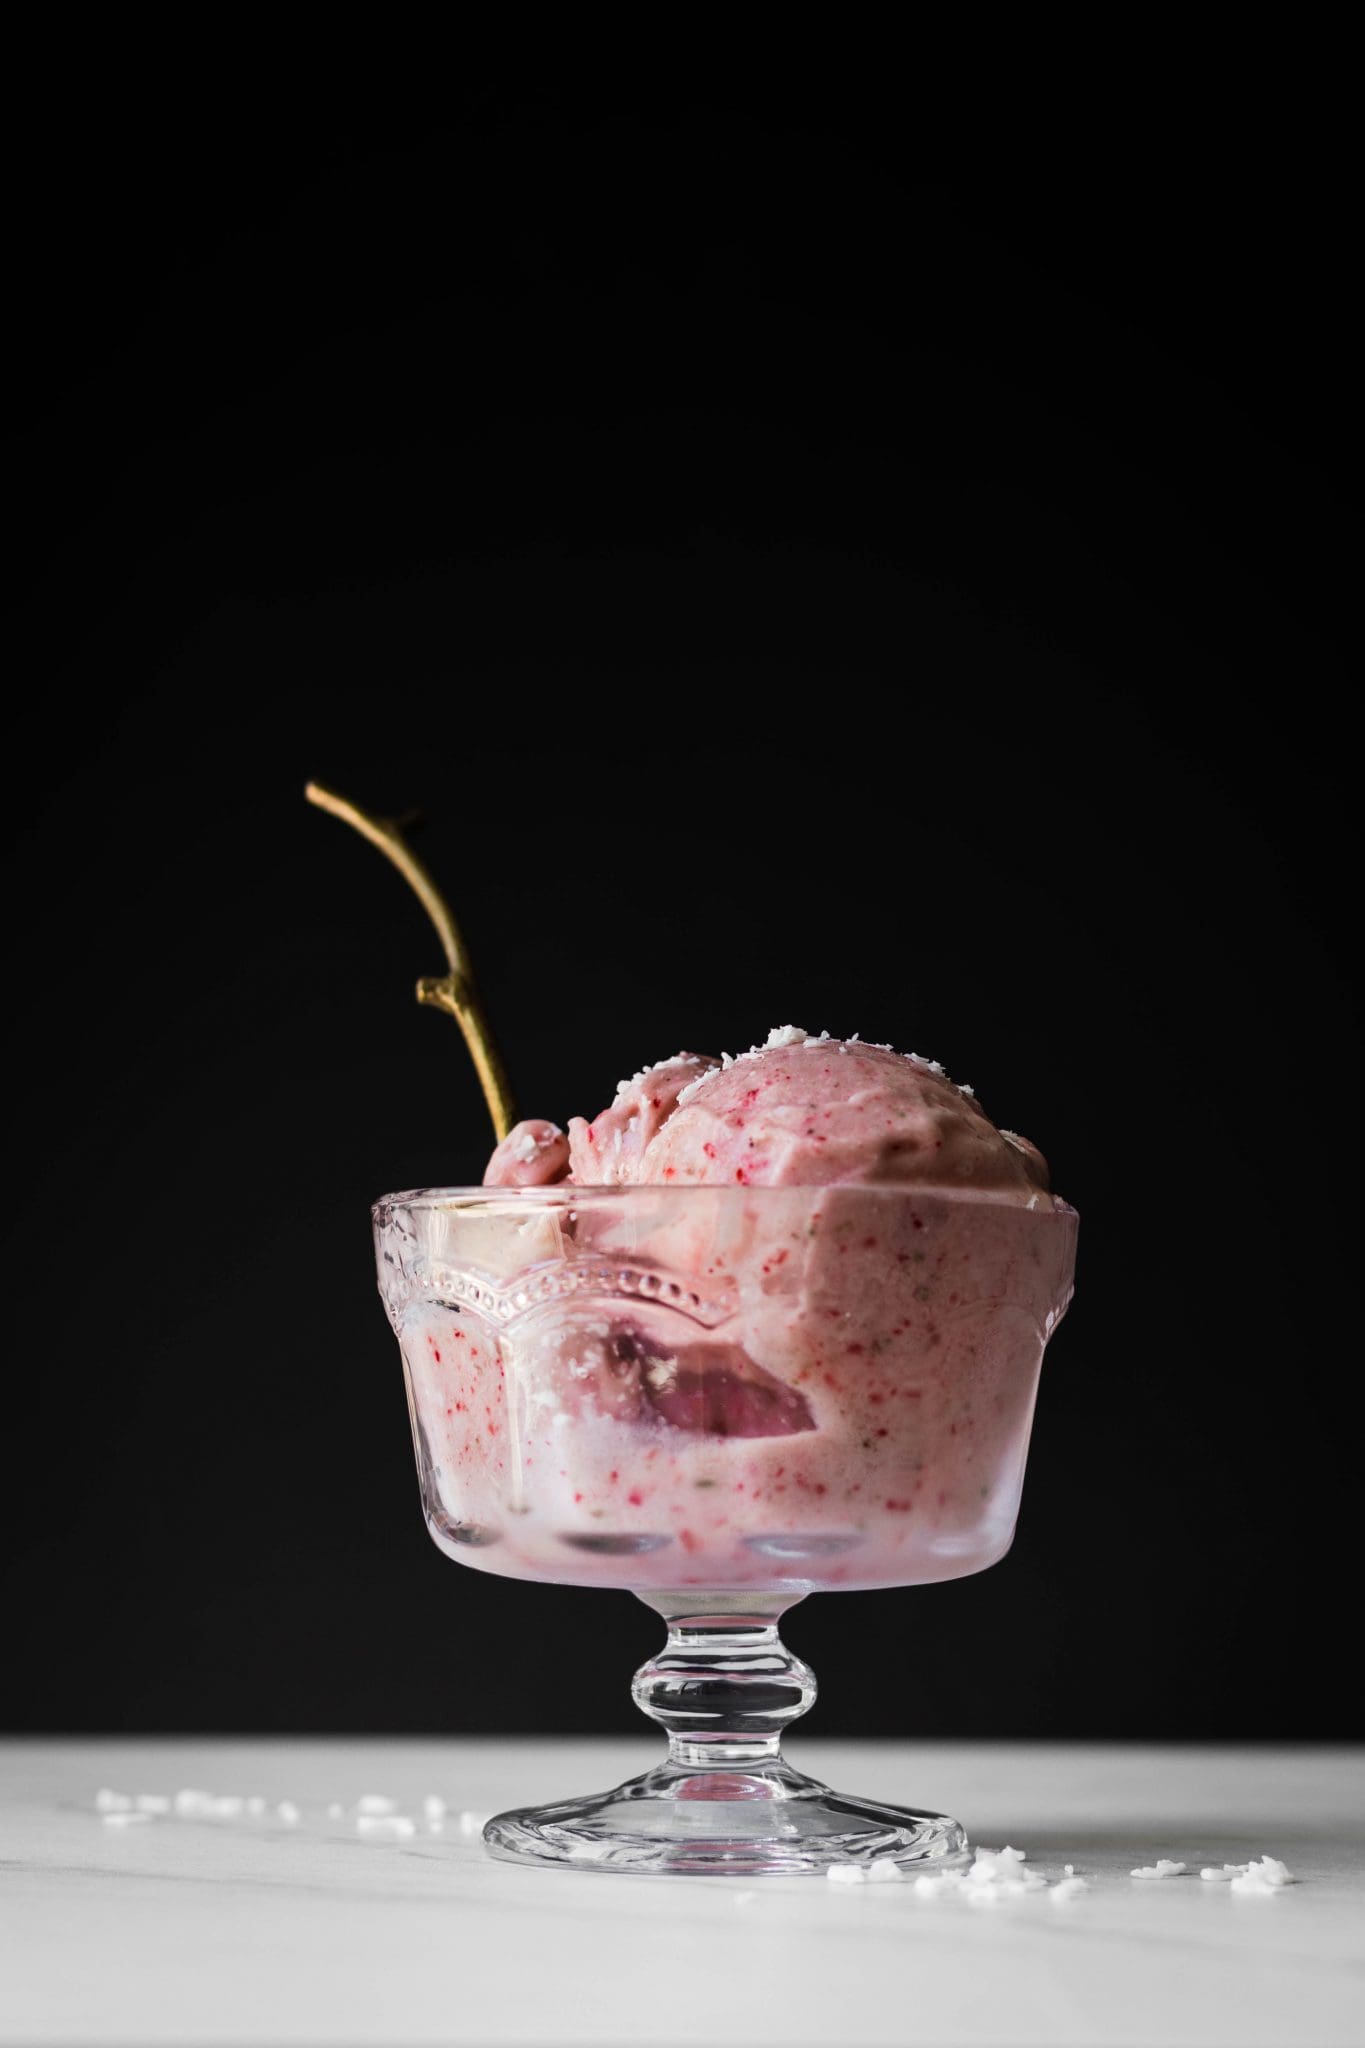 strawberry banana ice cream in a bowl